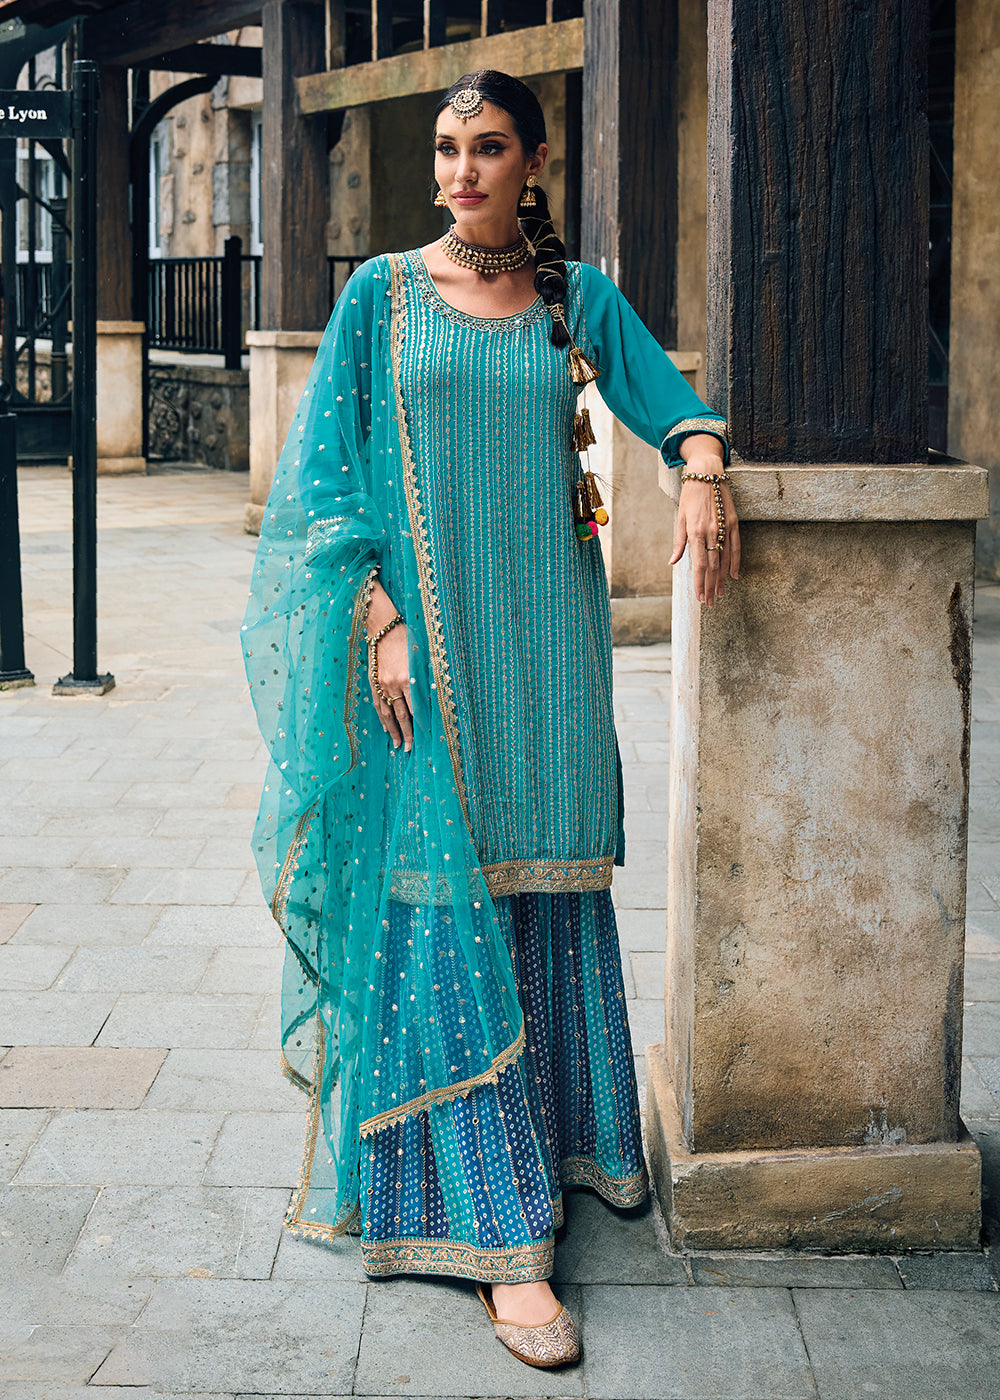 Buy Now Punjabi Style Turquoise Embroidered Designer Palazzo Suit Online in USA, UK, Canada, Germany, Australia & Worldwide at Empress Clothing.